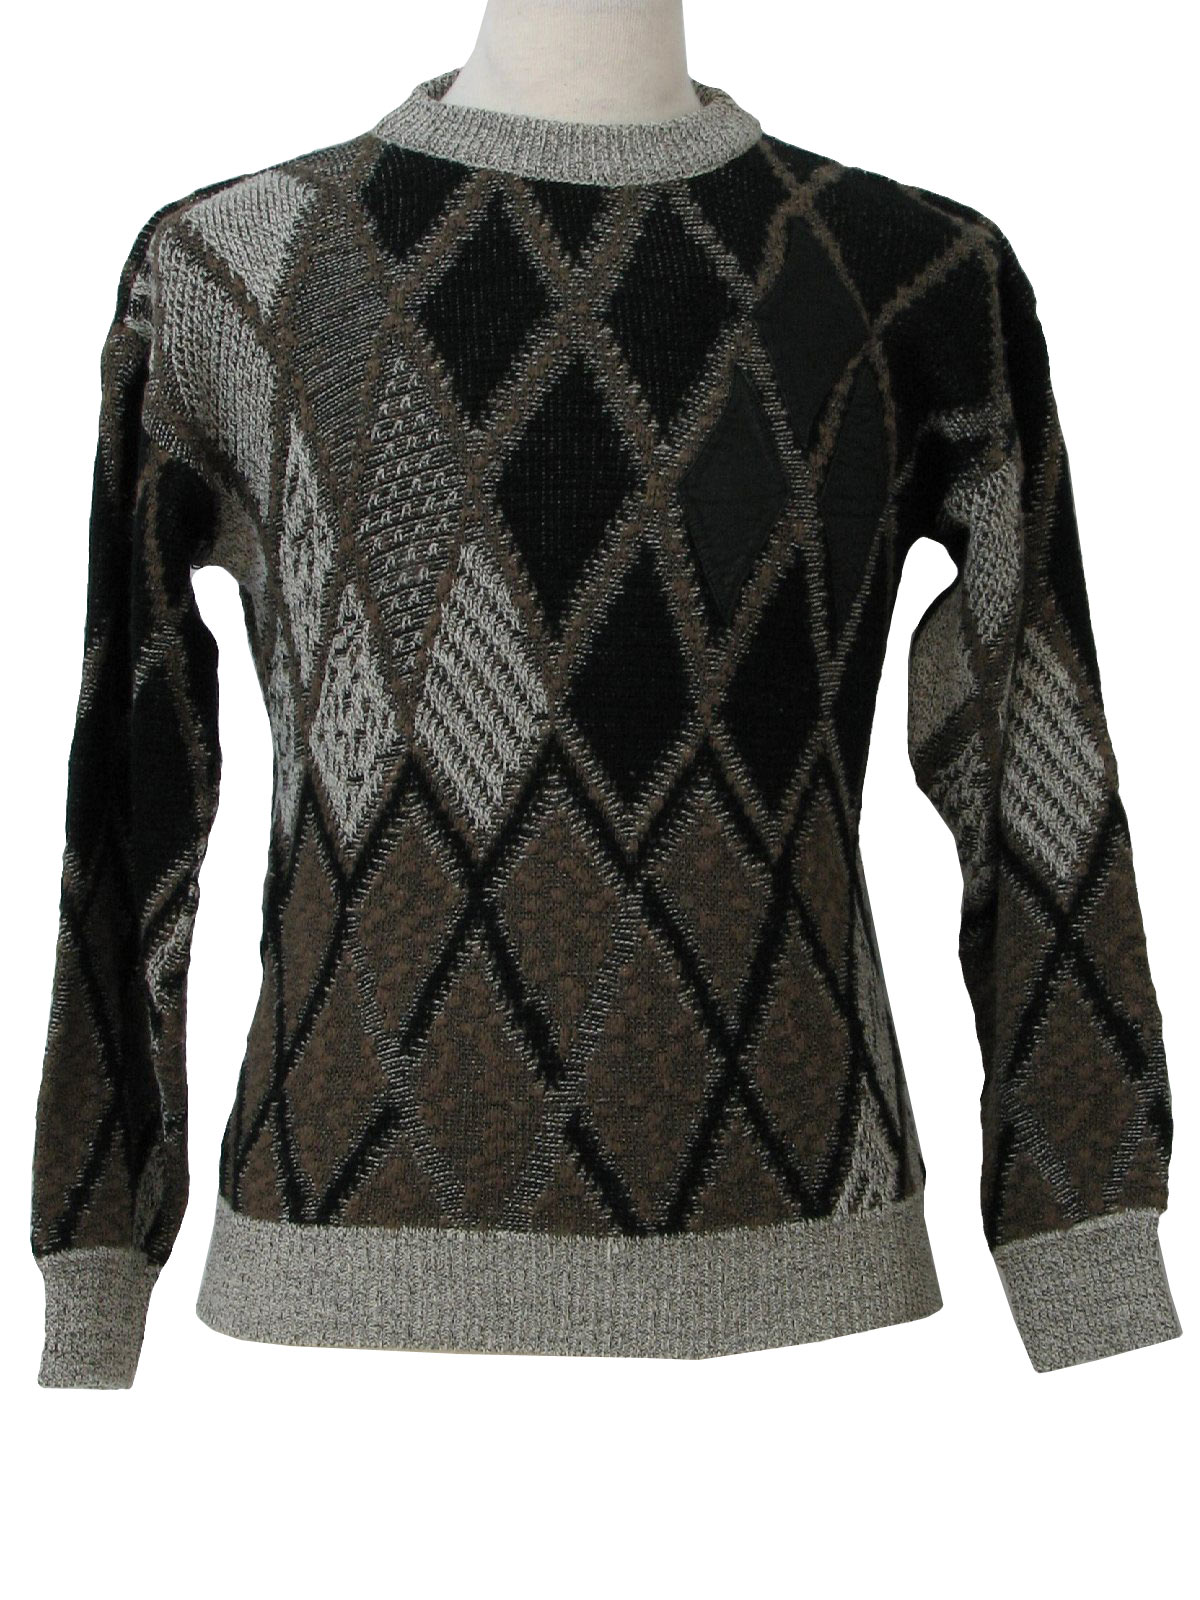 Retro 1980's Sweater (Cambridge Classics) : 80s -Cambridge Classics ...